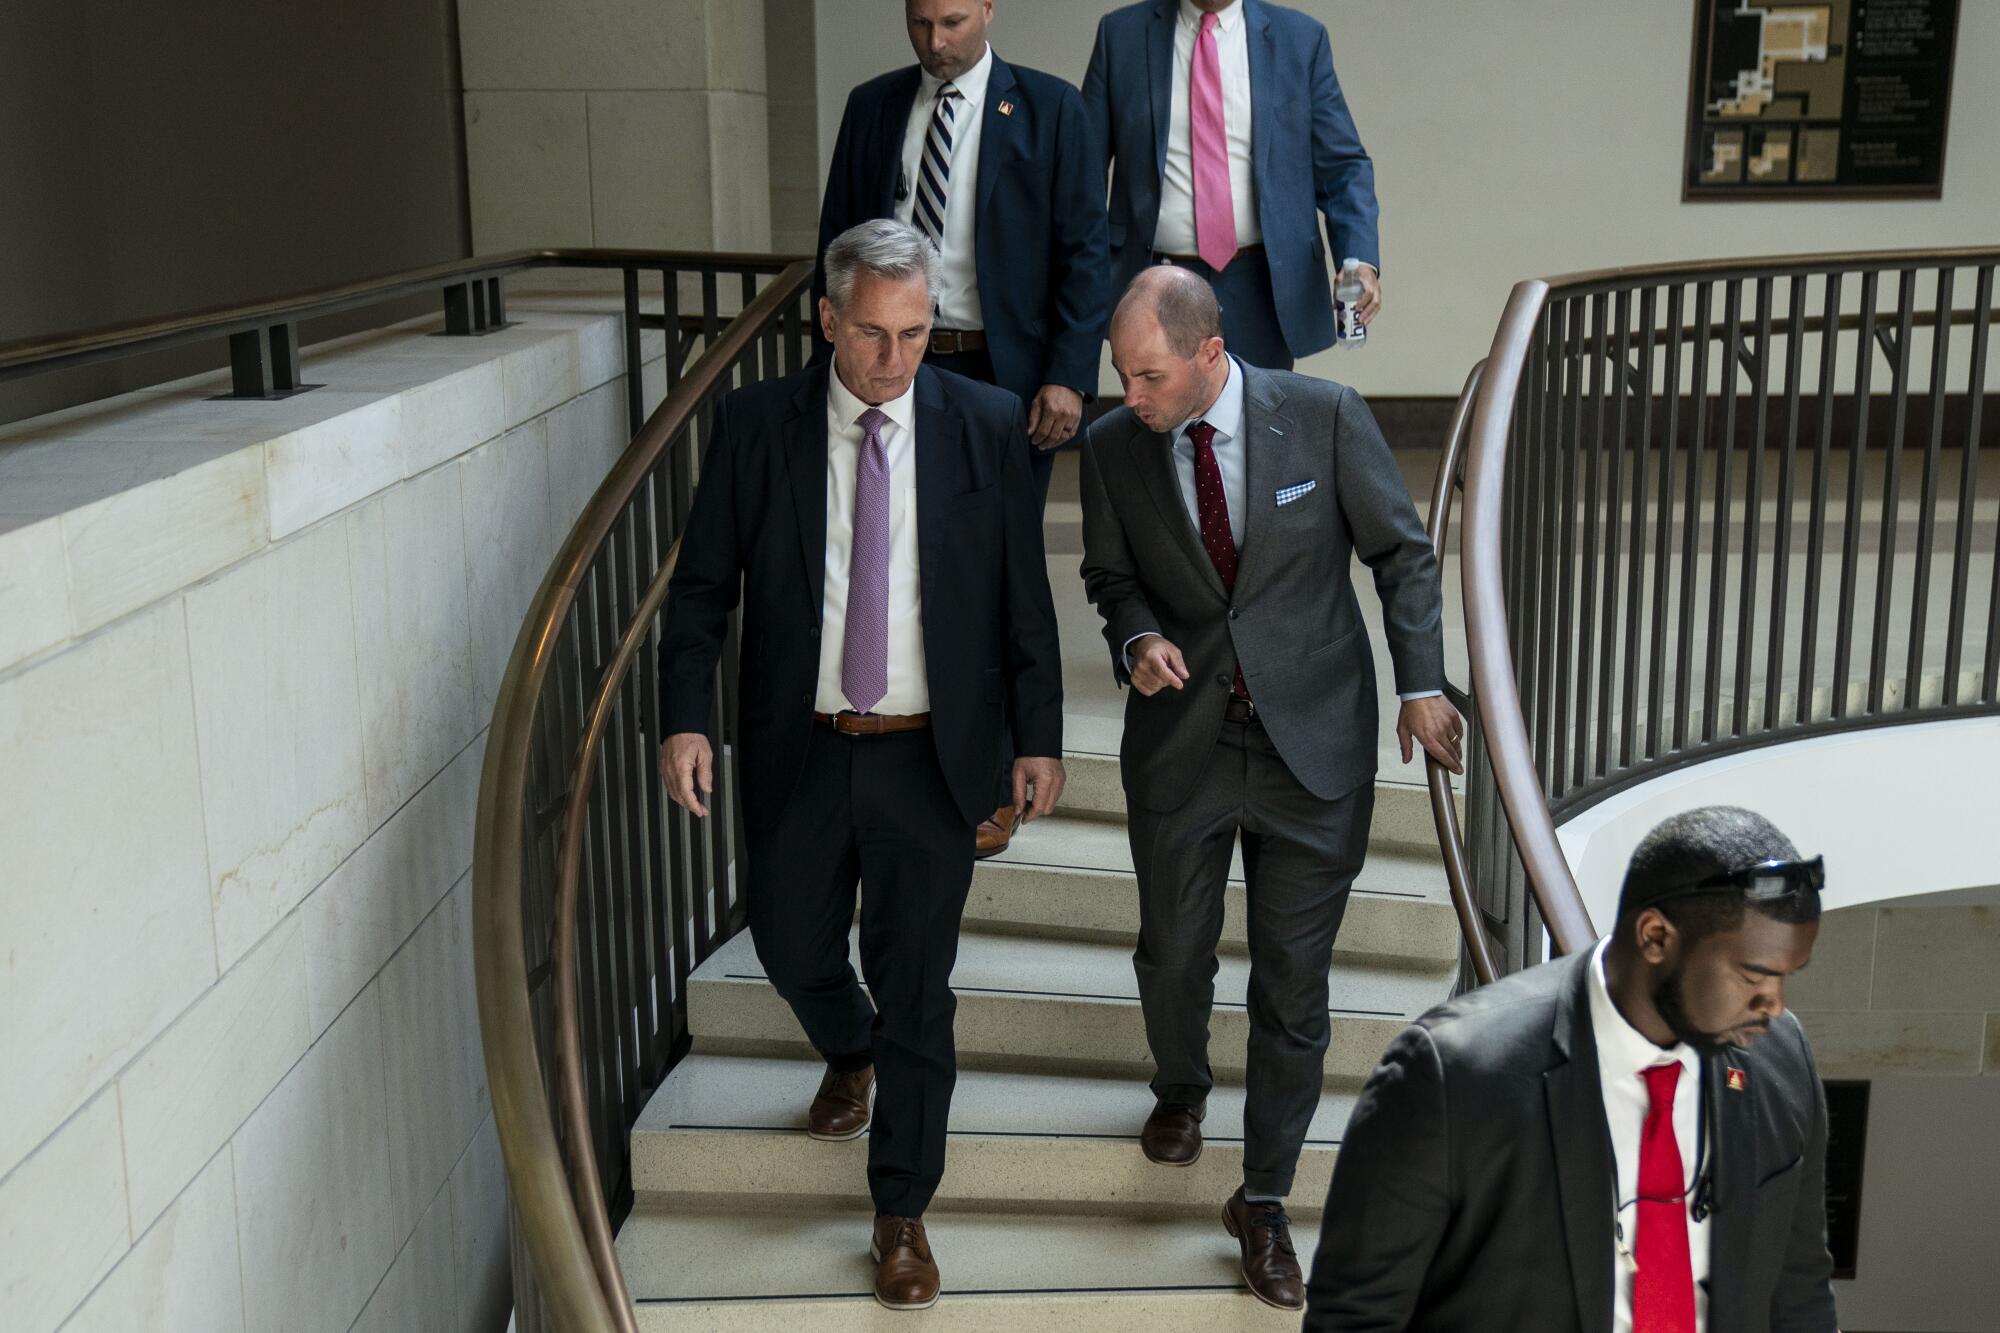 Men walking on a staircase.